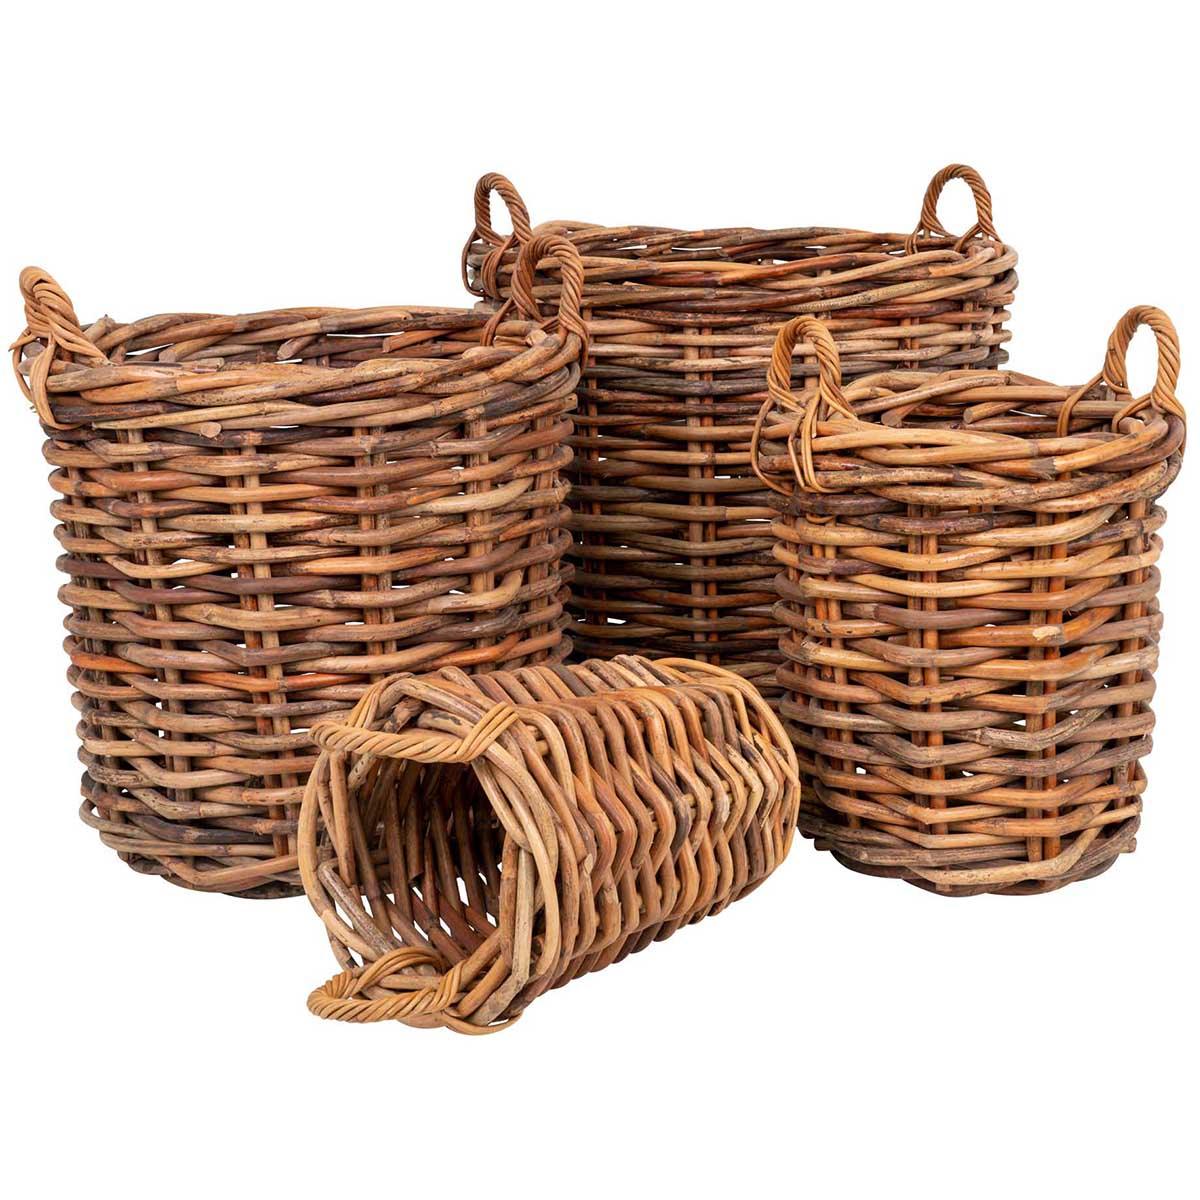 Burton Baskets (4/Set) - WOO .Design